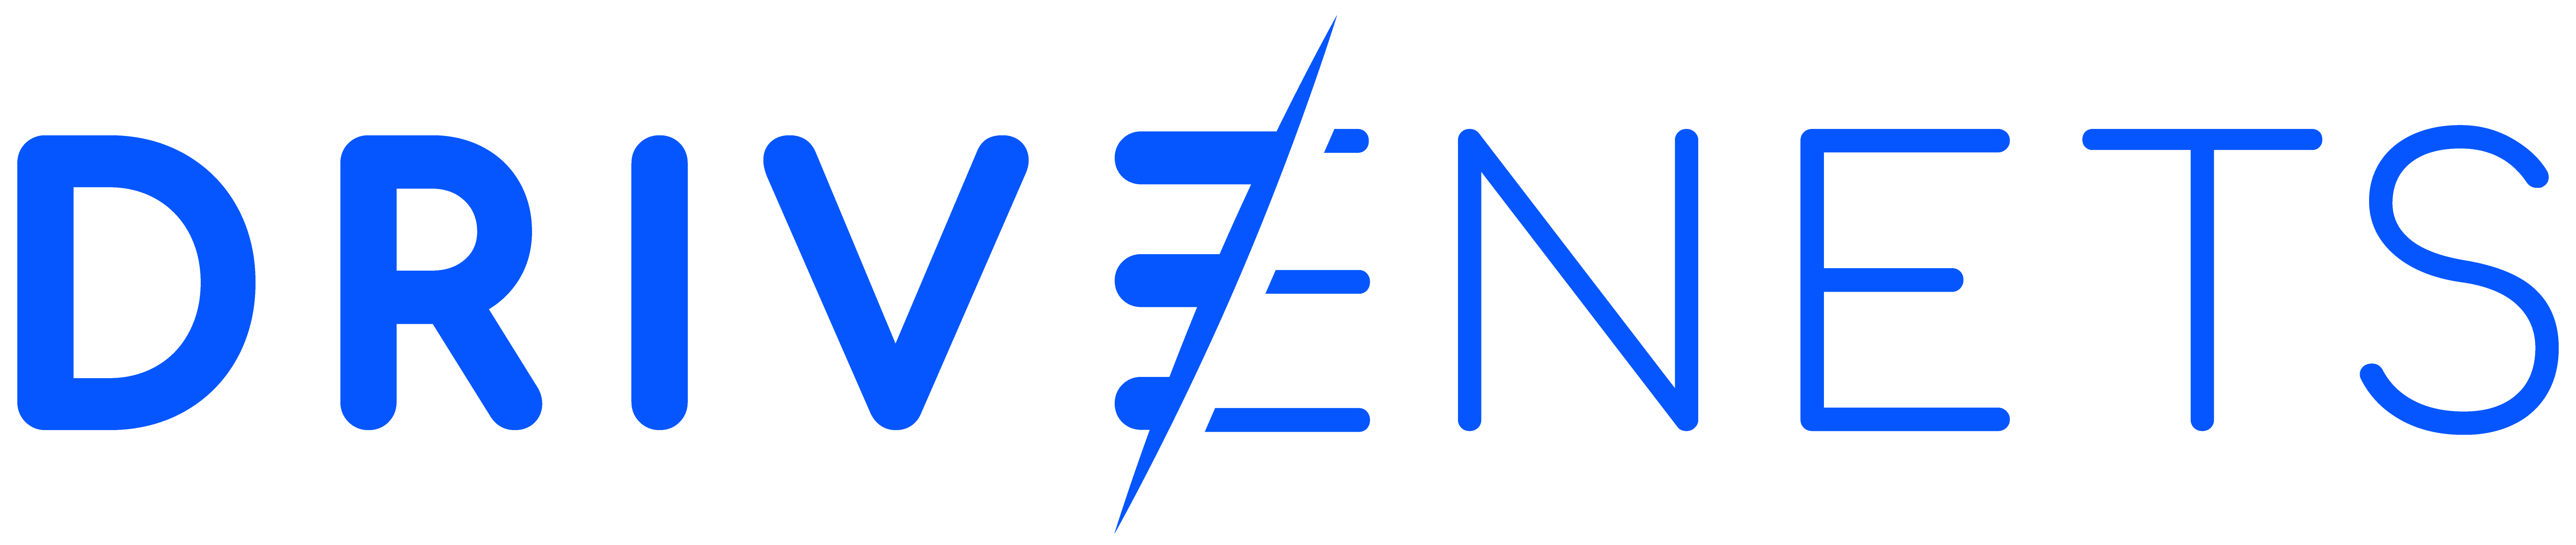 Drivenets logo